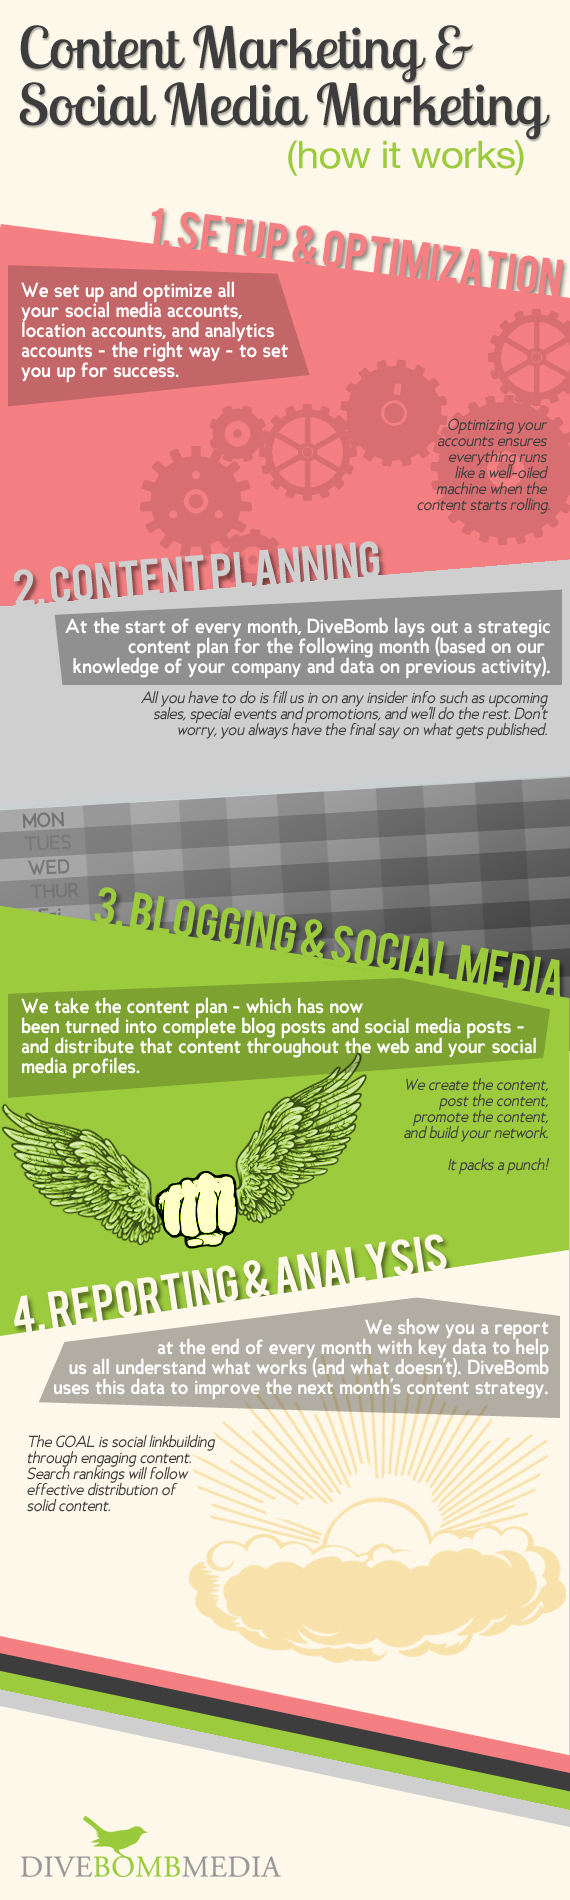 Content Marketing and social media marketing process